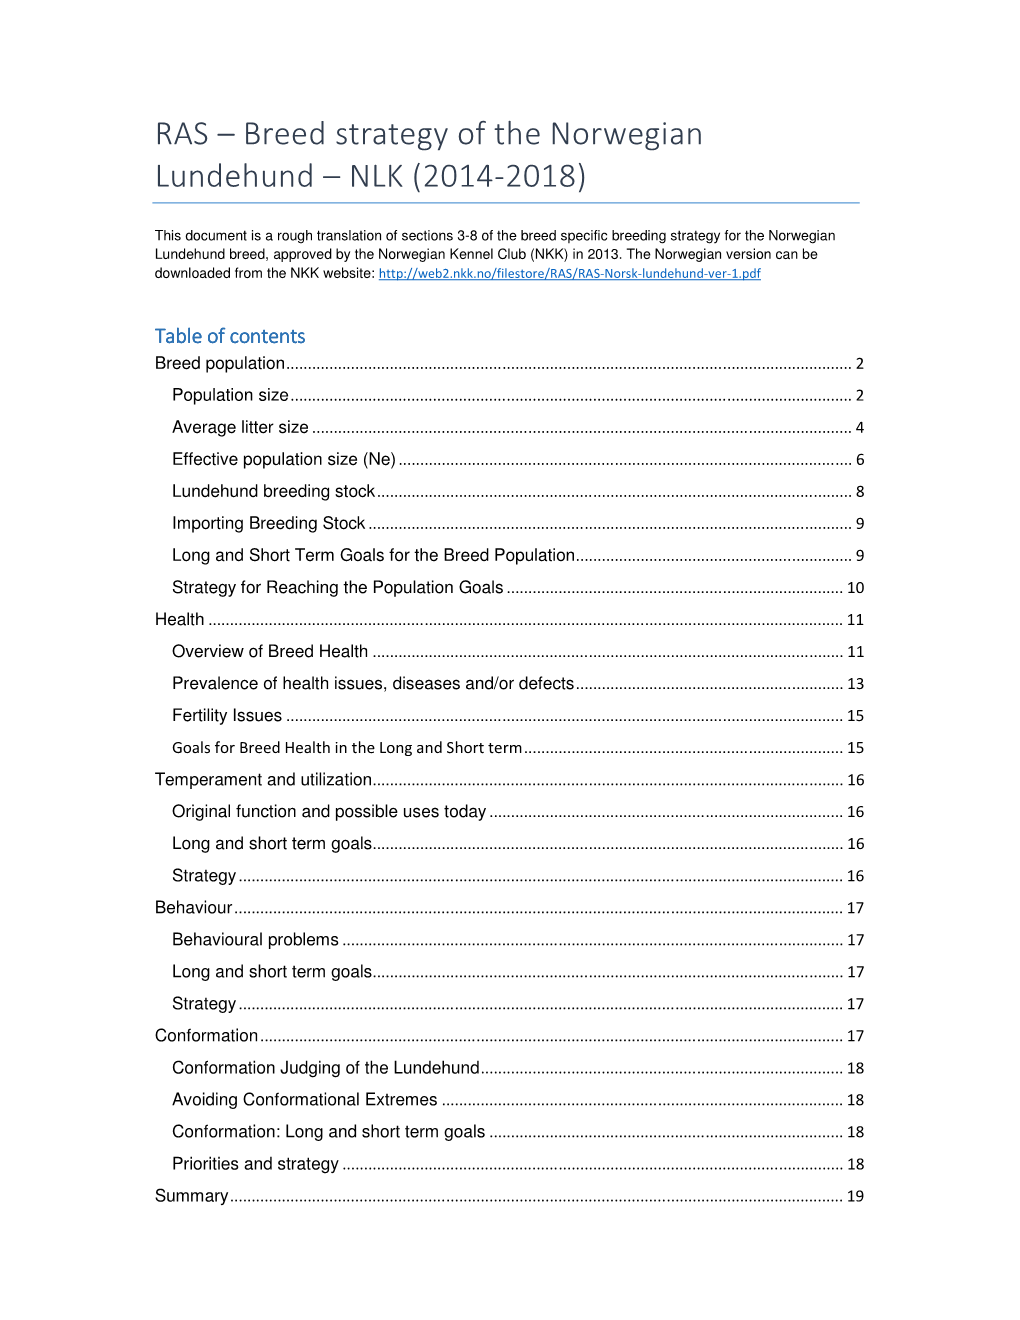 Breed Strategy of the Norwegian Lundehund – NLK (2014-2018)